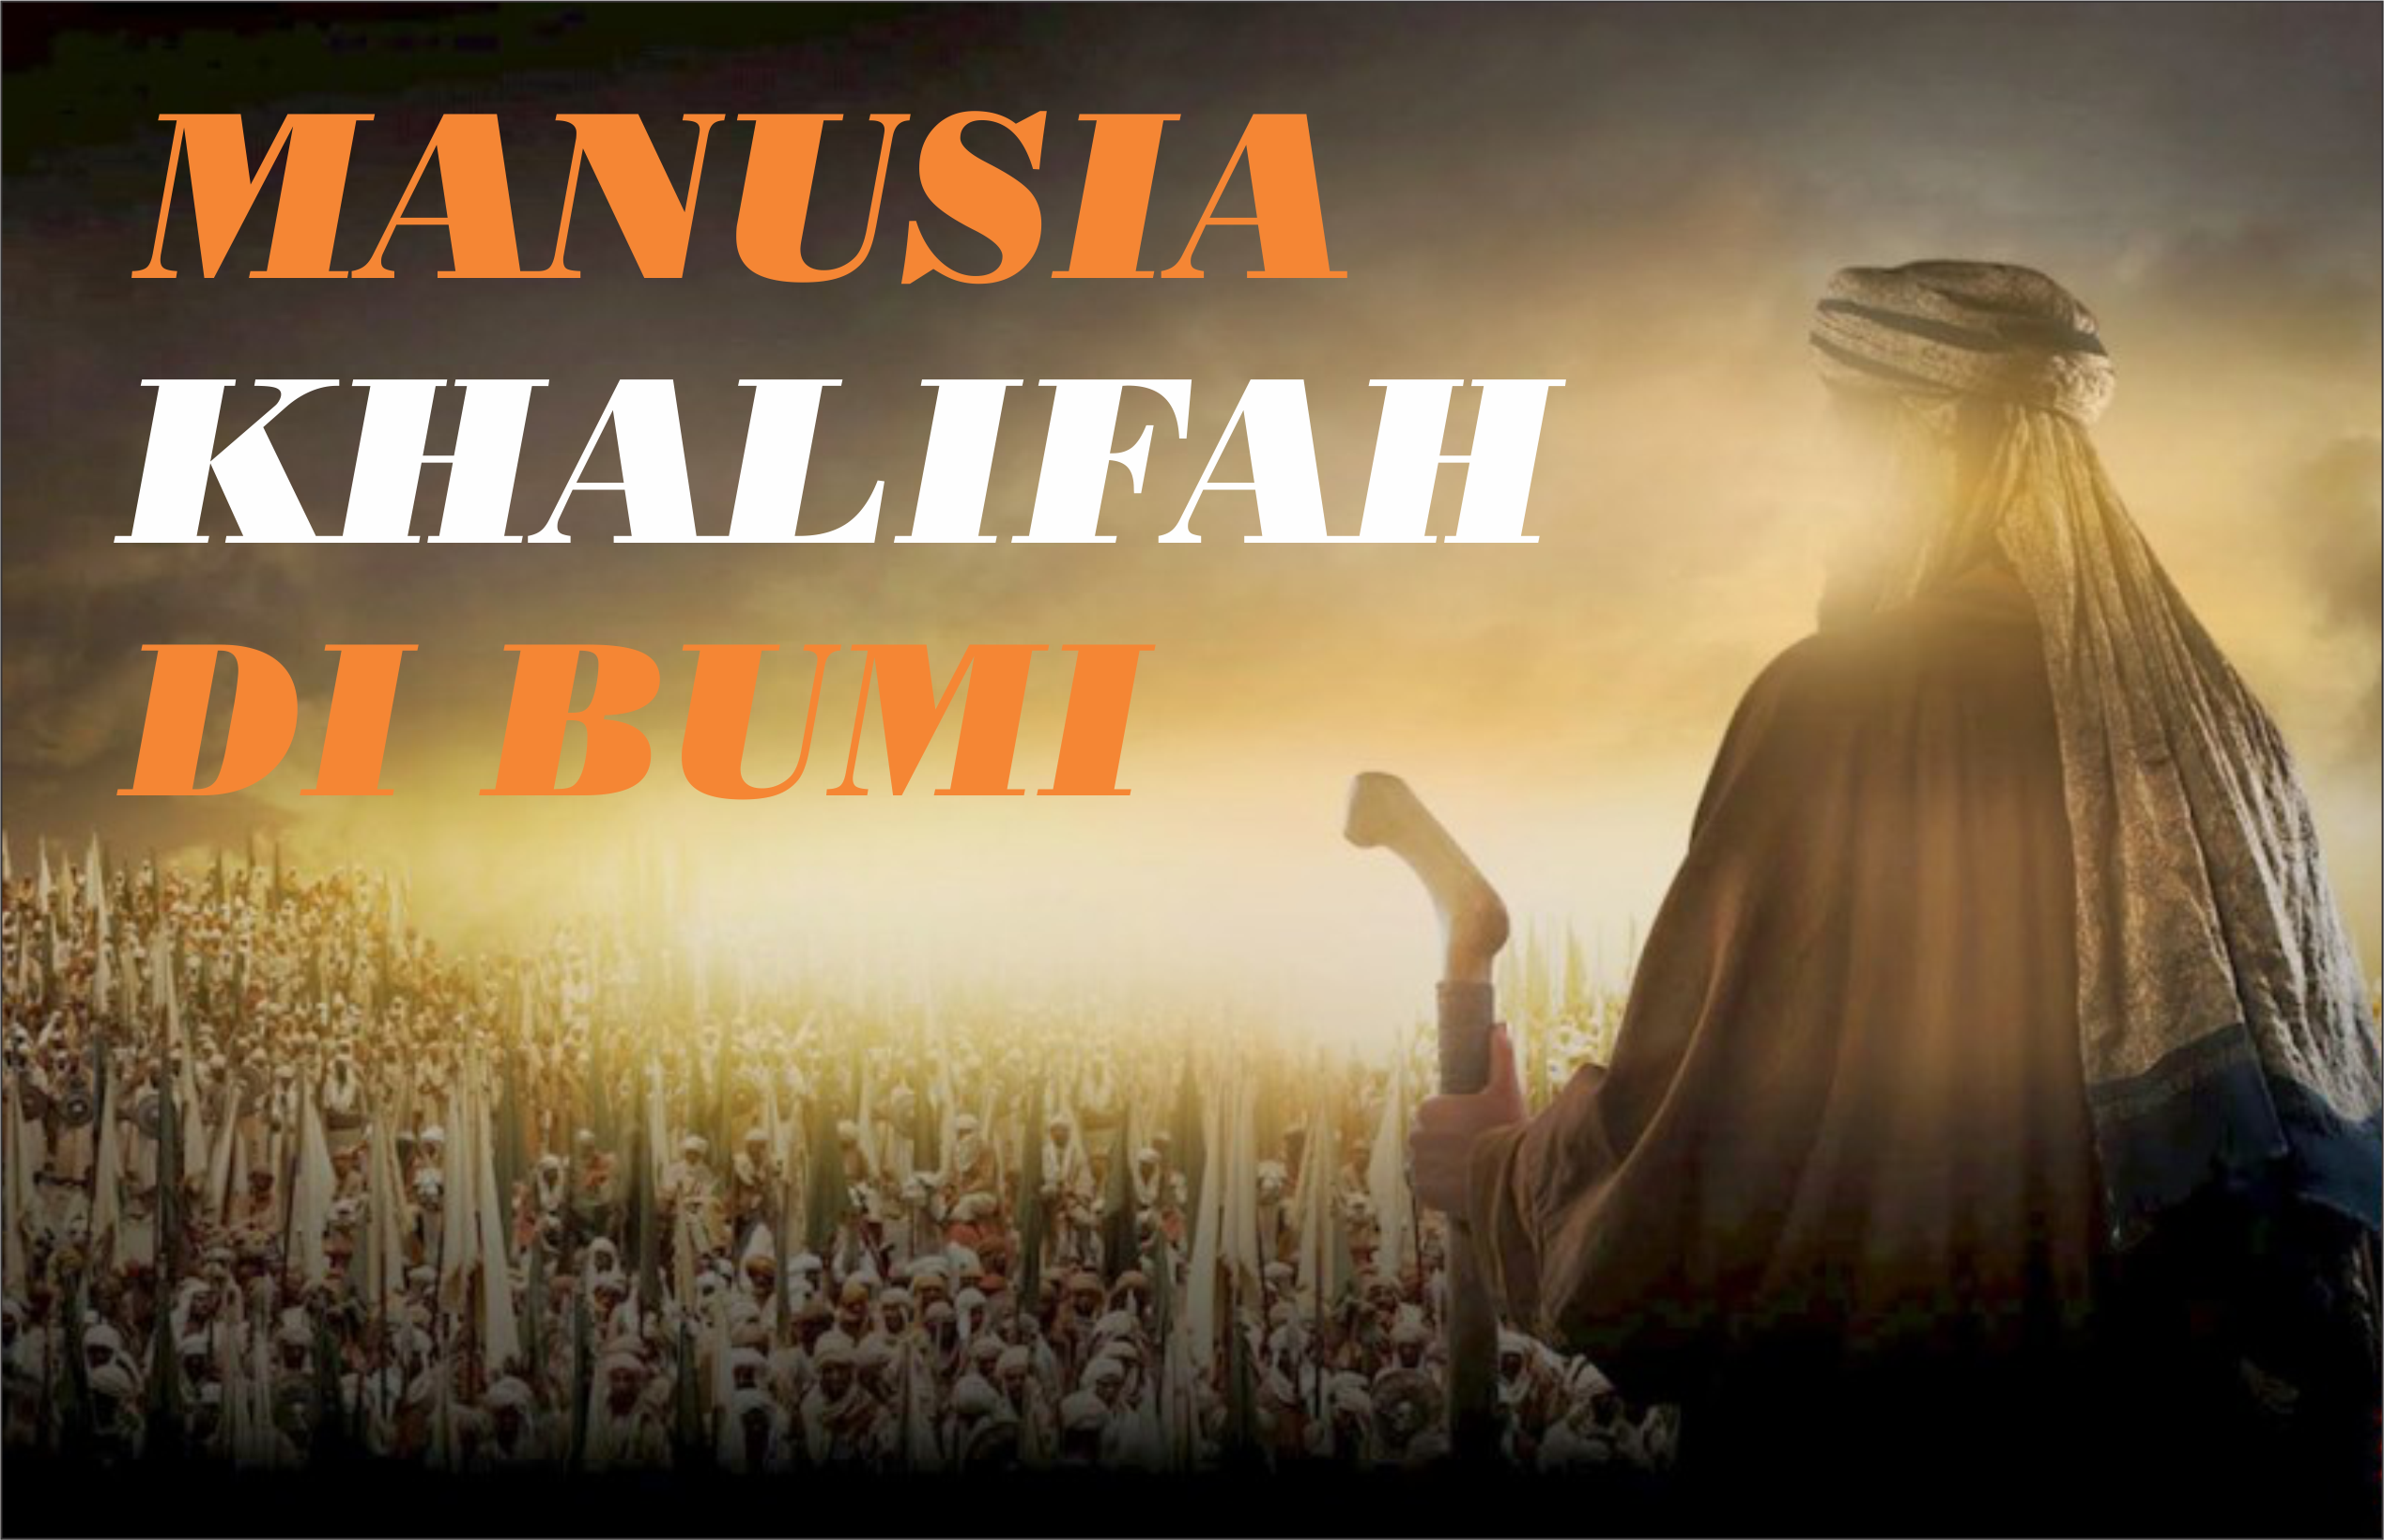 MANUSIA KHALIFAH DI BUMI - Pondok Pesantren Islam Al Mukmin